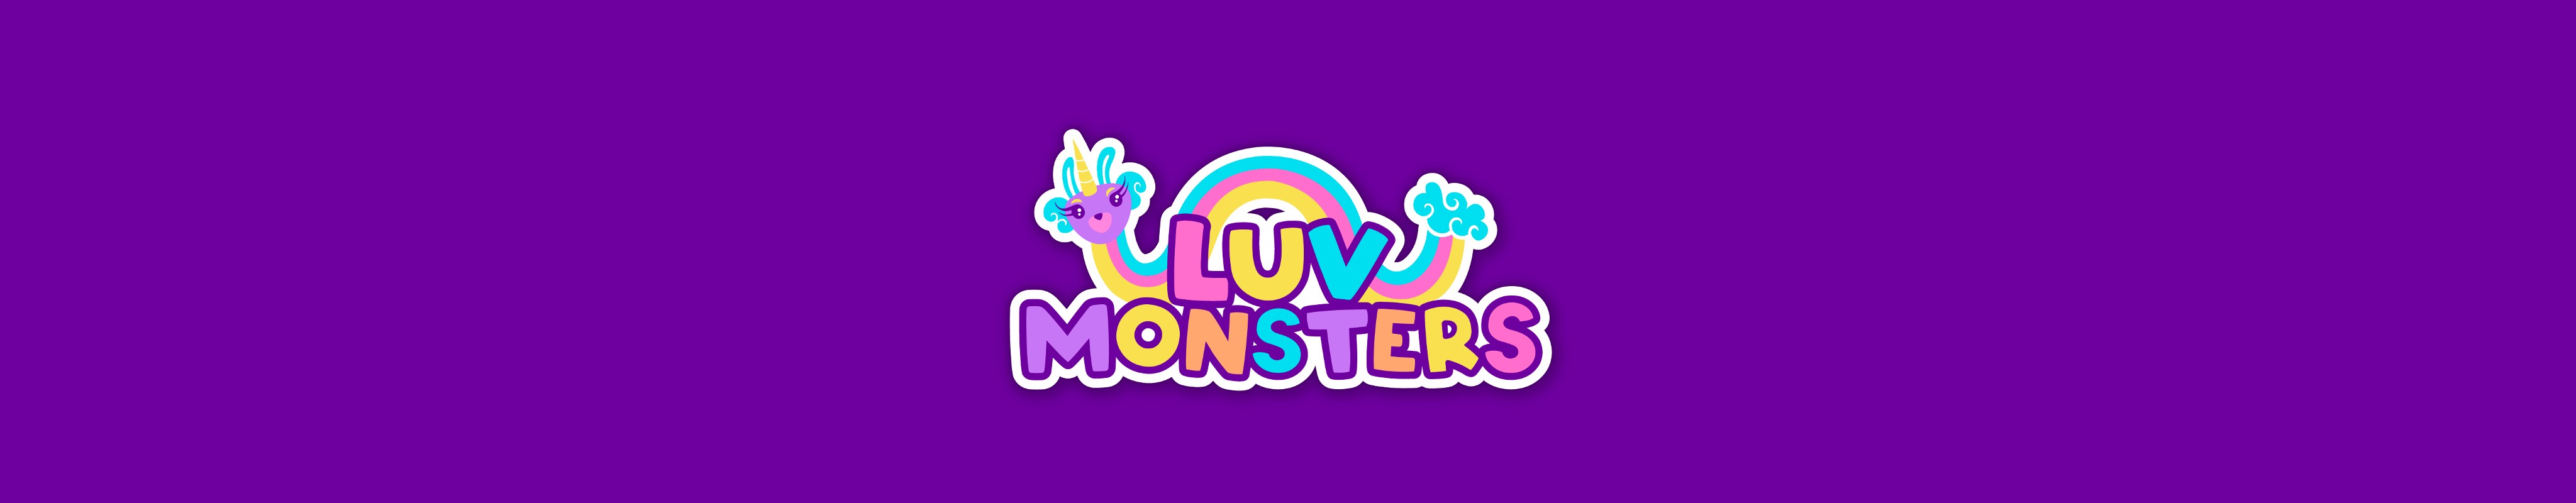 LuvMonsters banner